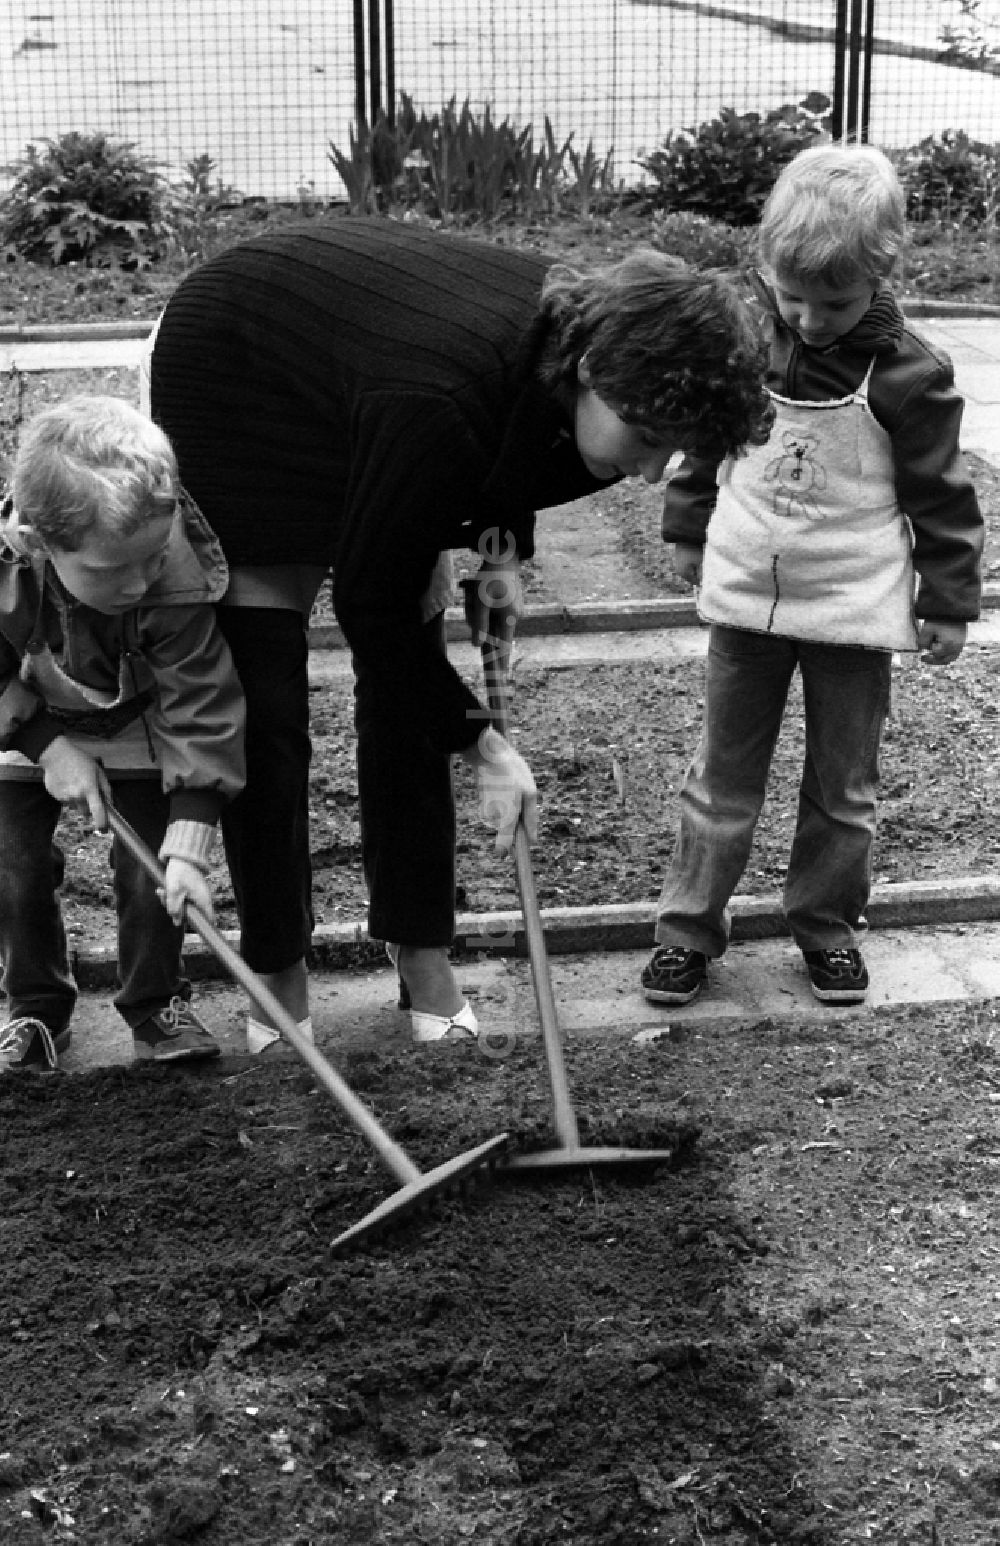 Berlin: Gartenarbeit im Schulgarten in Berlin, der ehemaligen Hauptstadt der DDR, Deutsche Demokratische Republik